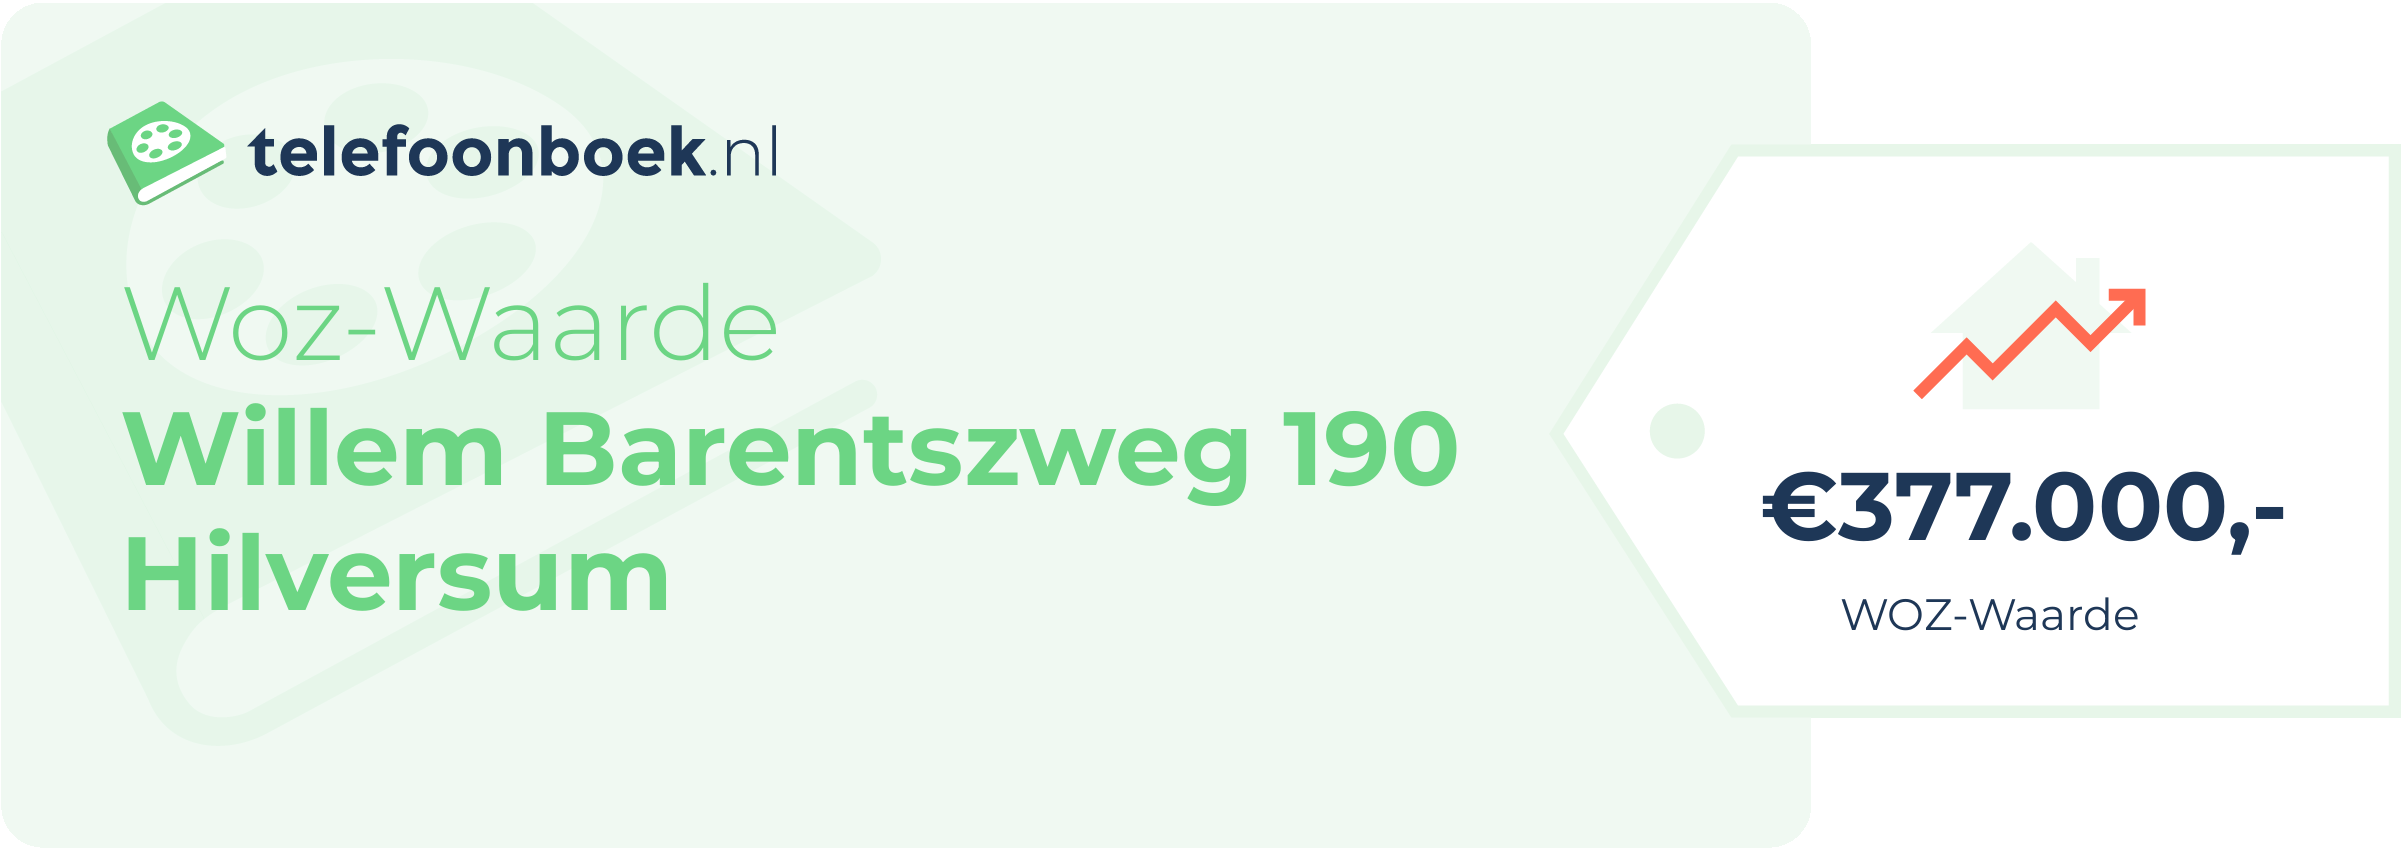 WOZ-waarde Willem Barentszweg 190 Hilversum